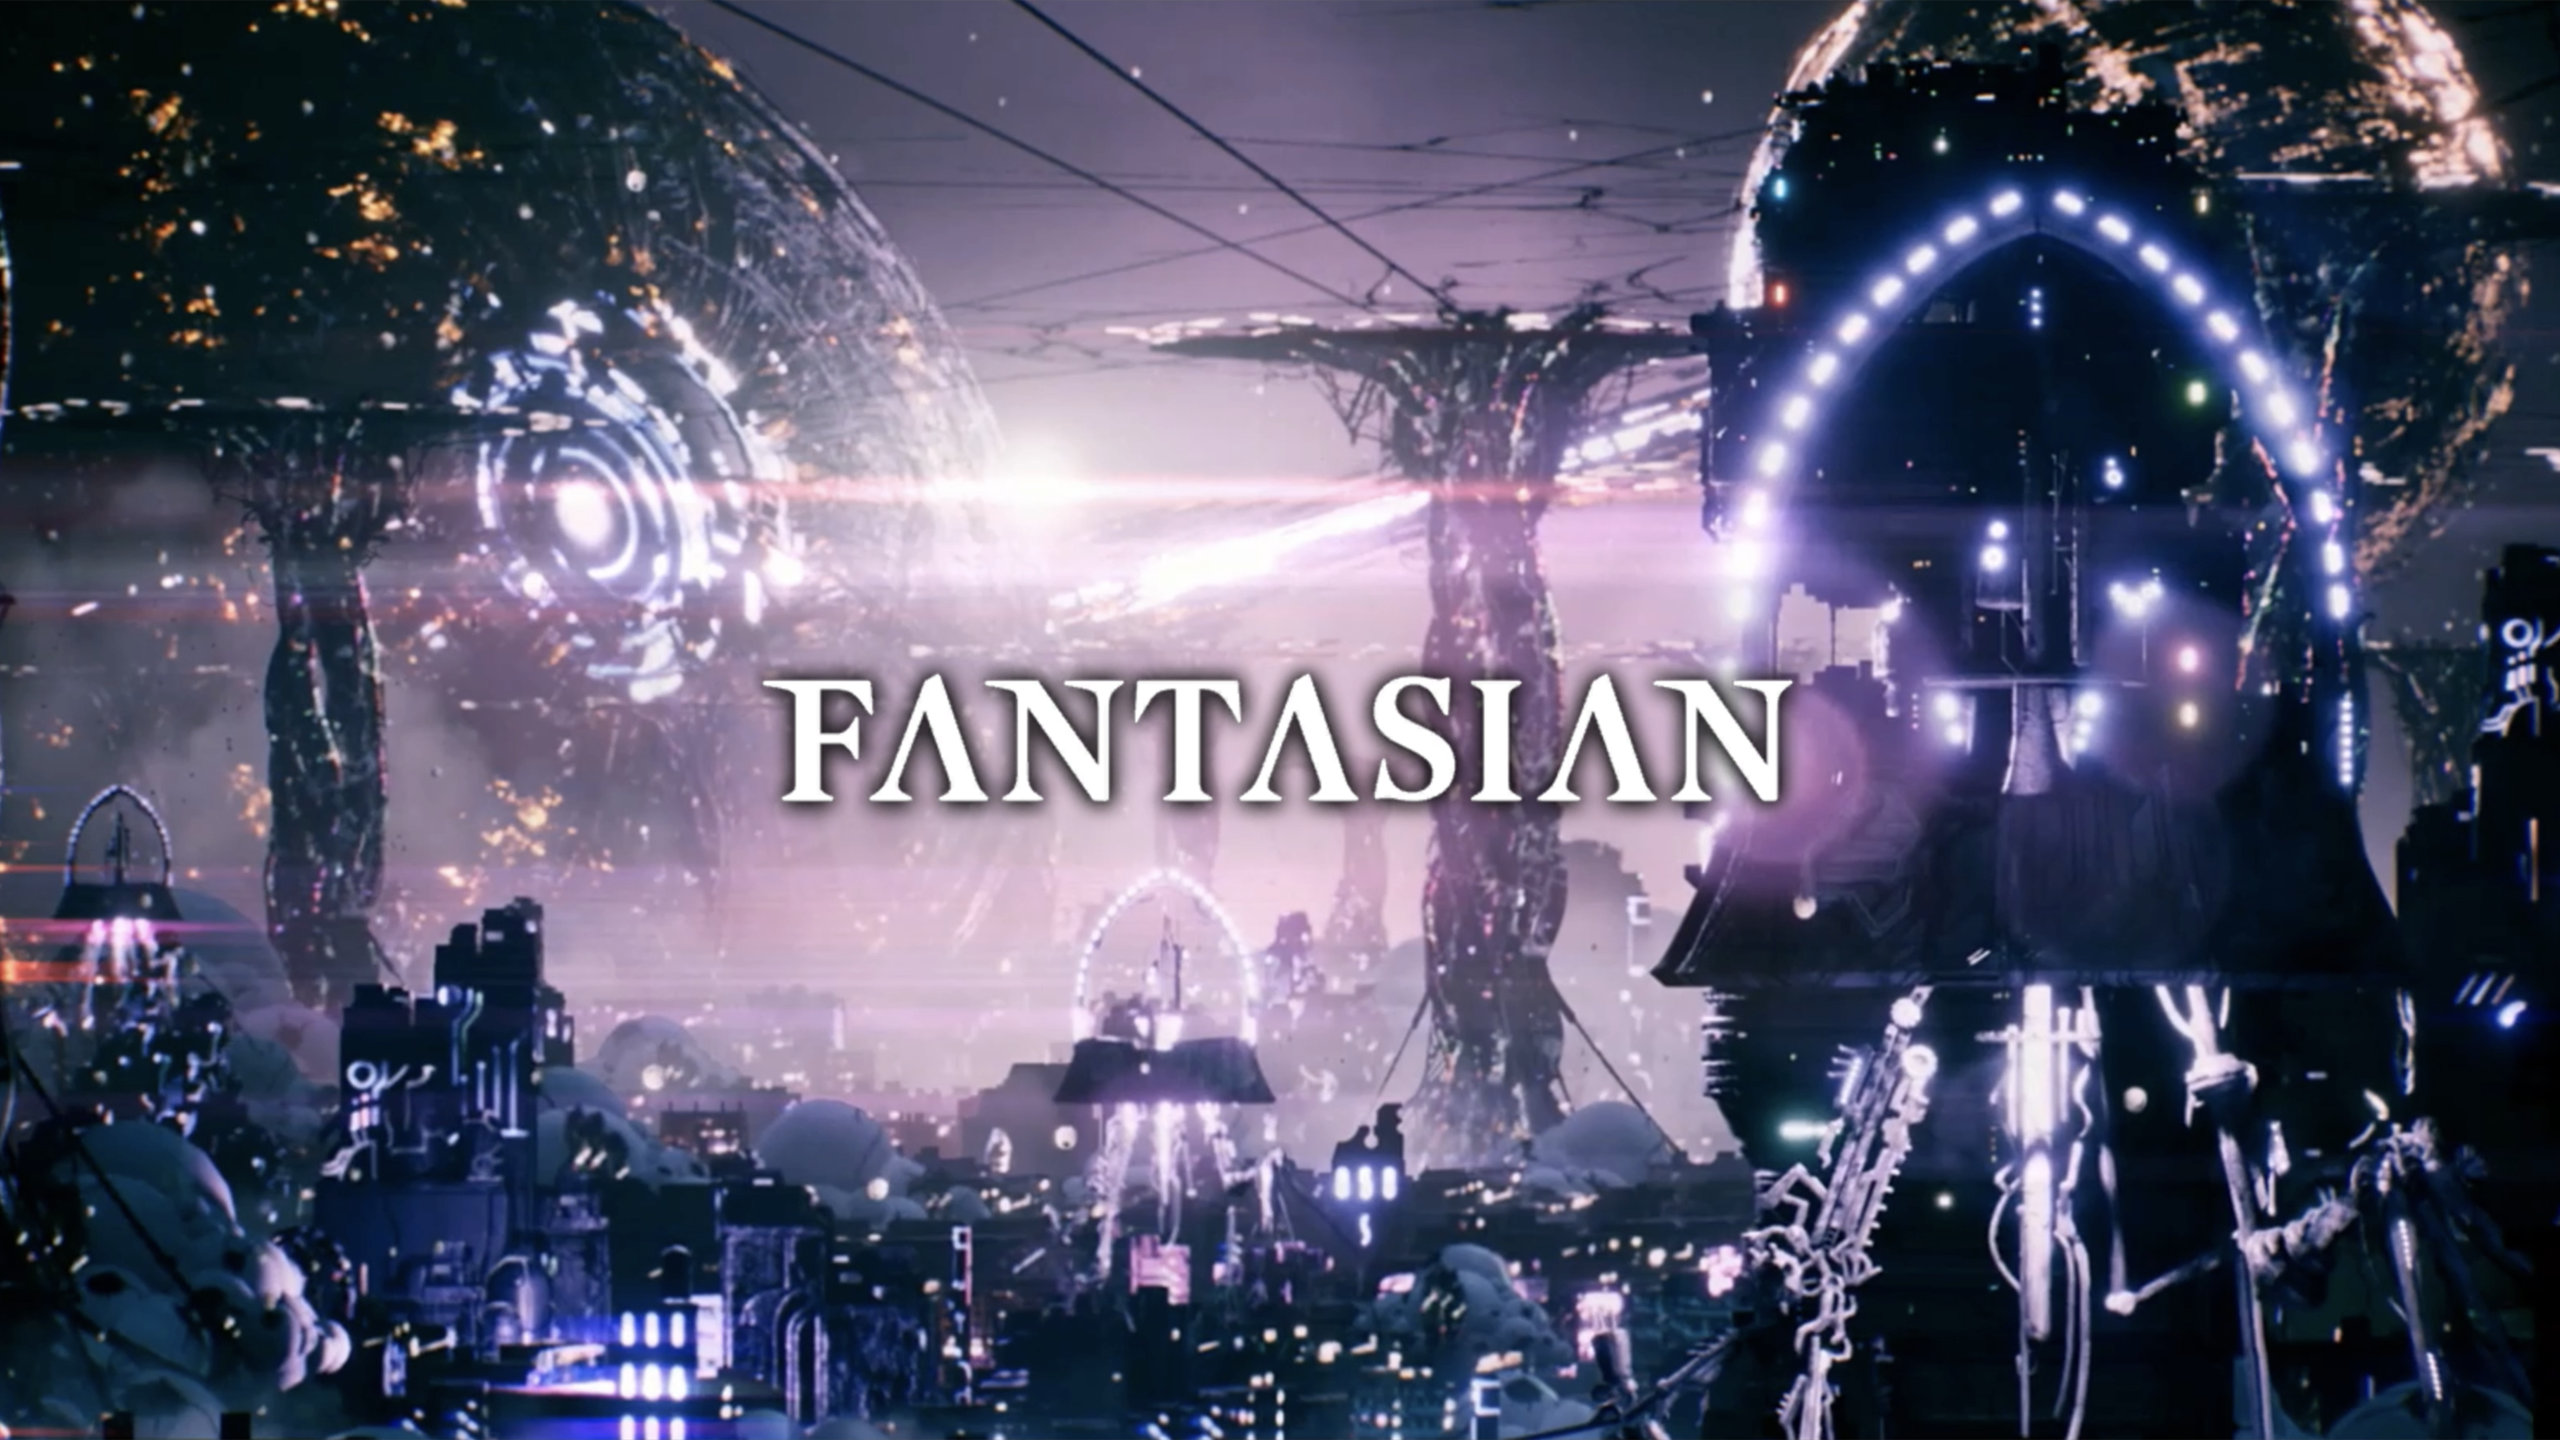 Fantasian Screenshot of the game logo over a futuristic glowing city skyline.